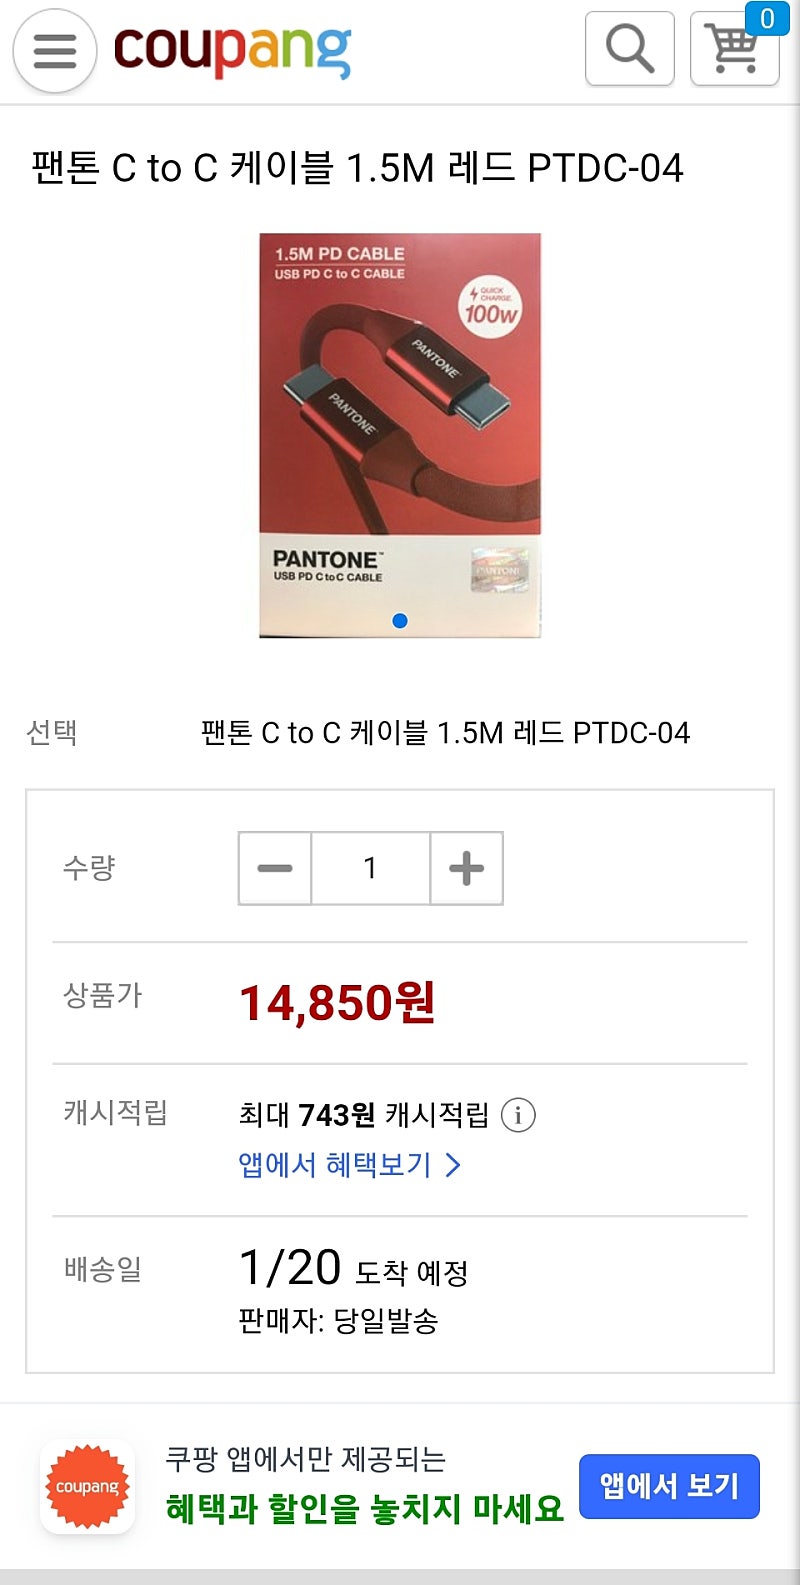 PANTONE 1.5M C TO C 100W PD CABLE 새거 6천원에 팝니다. 인터넷 최저가에 반가격입니다